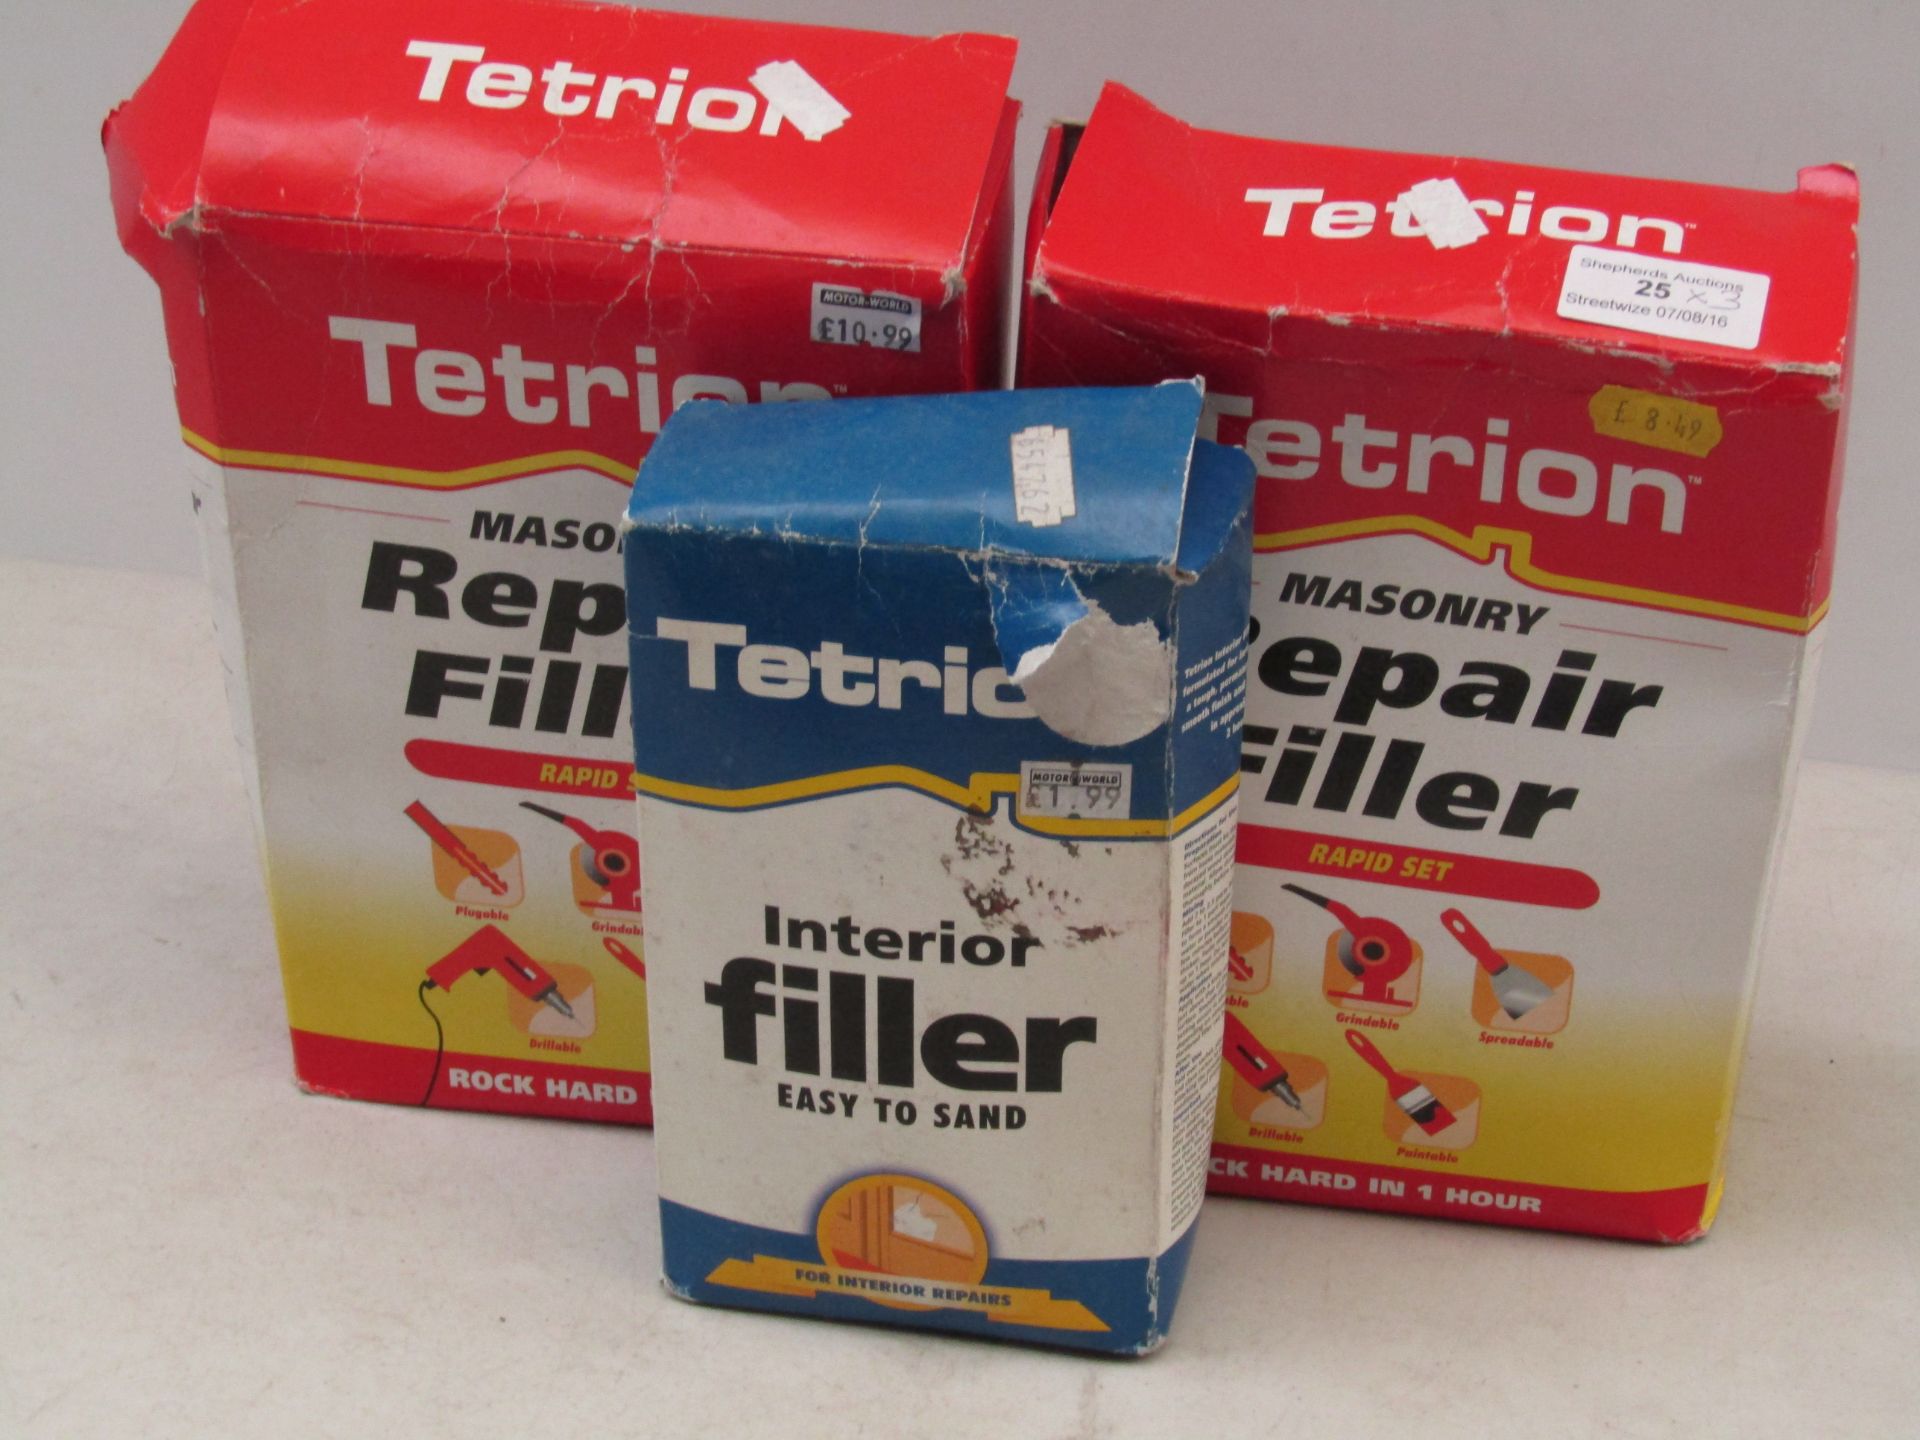 2x 2kg Boxs of Tetrion Masonry Repair Filler Rapid Set & 1x 0.5kg Box of Tetrion Interior Filler.